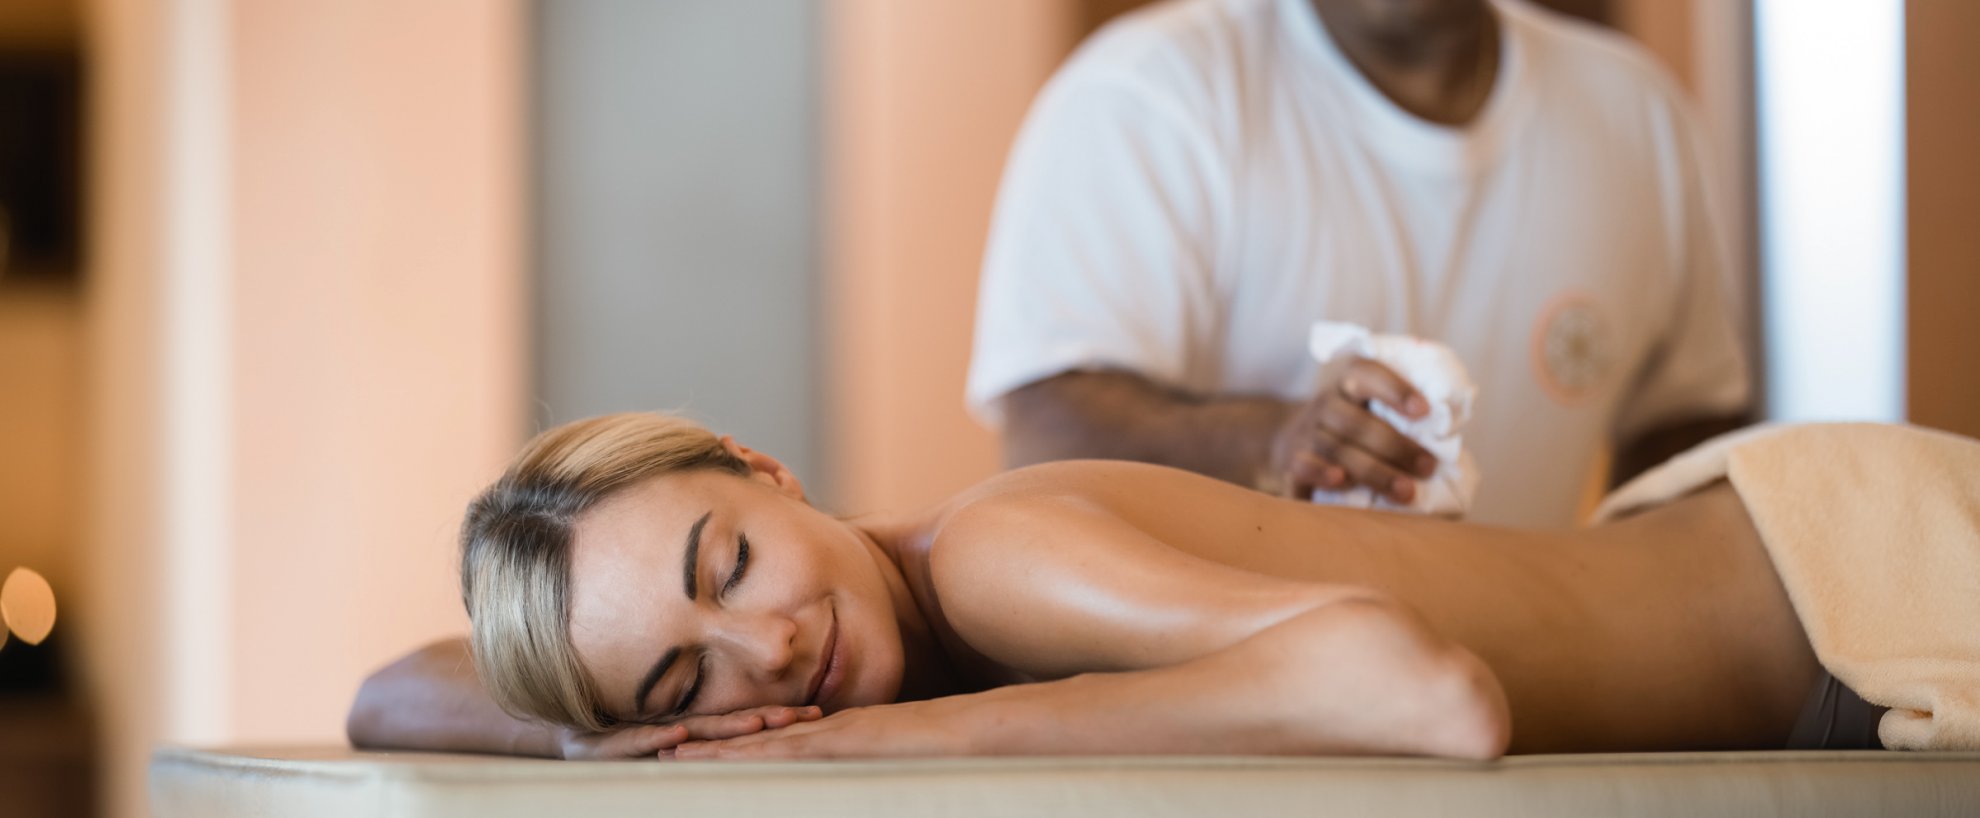 ayurveda urlaub italien suedtirol hotel engel ayurveda massage